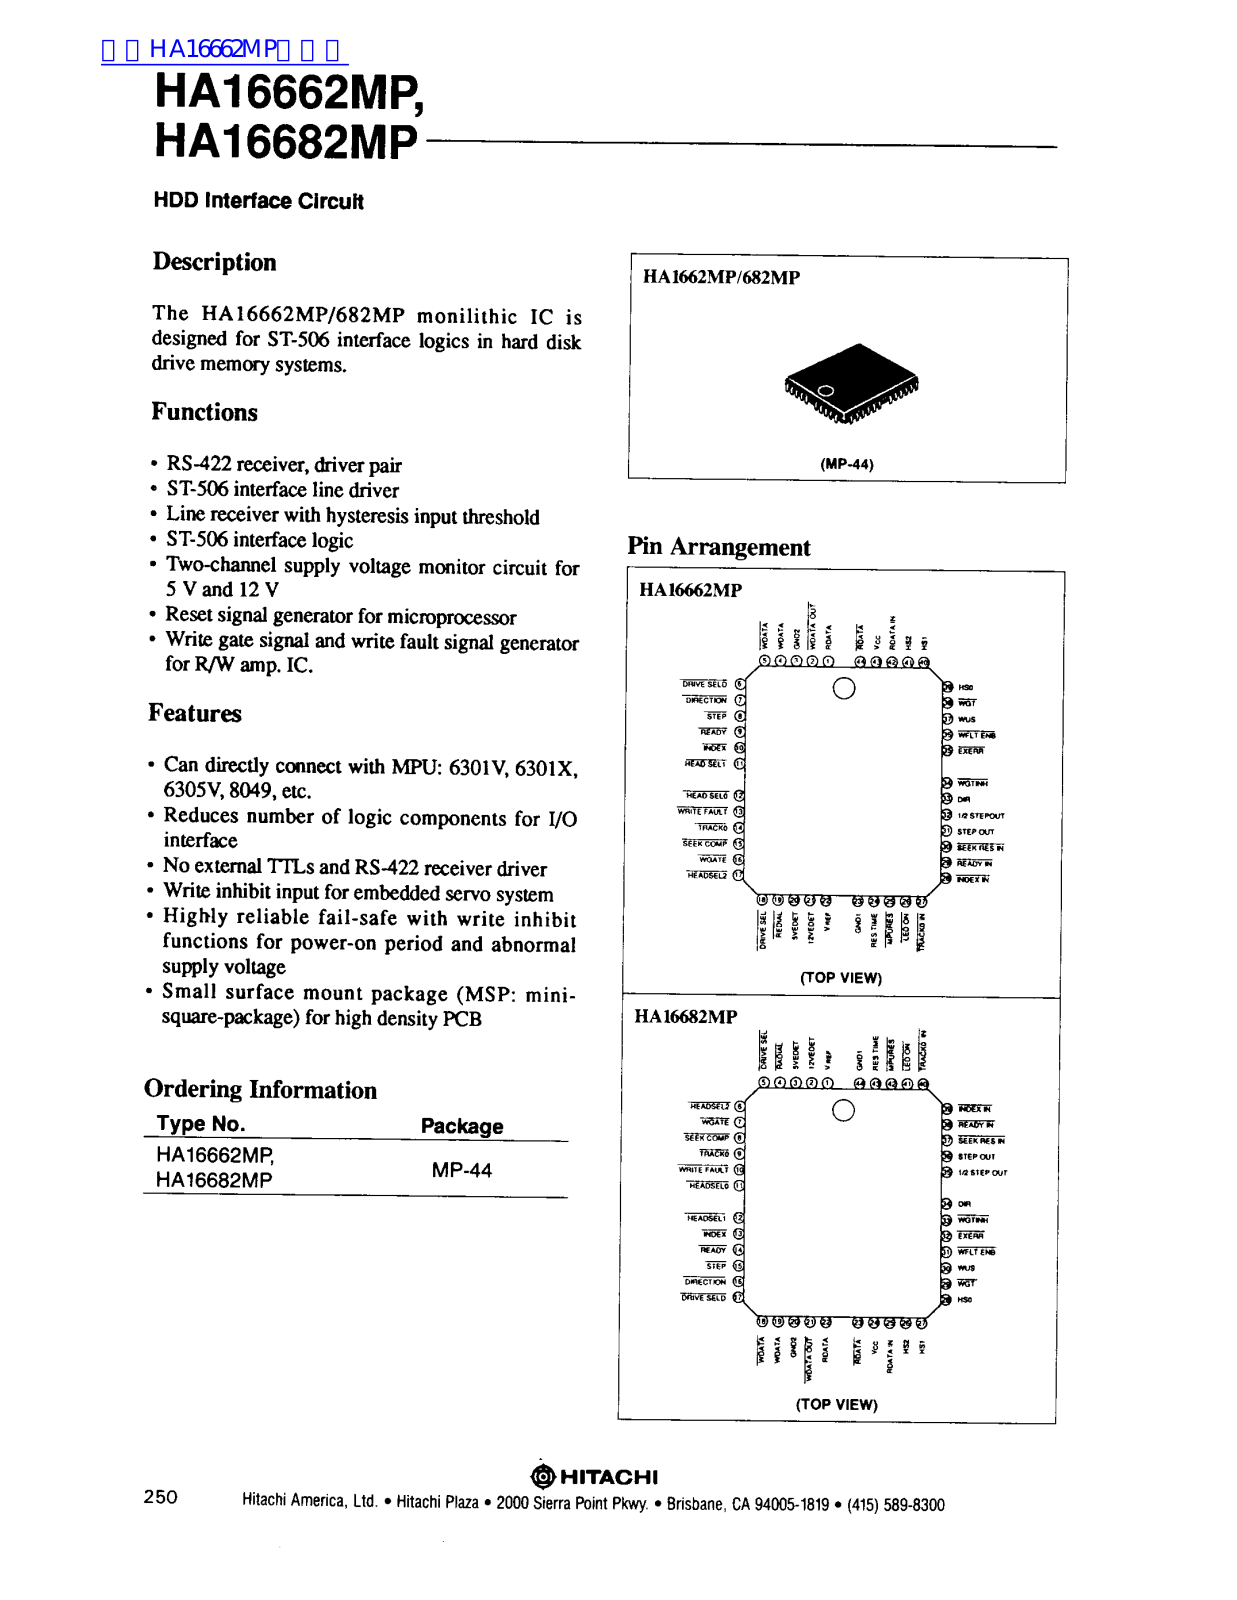 HITACHI HA16662MP, HA16682MP User Manual